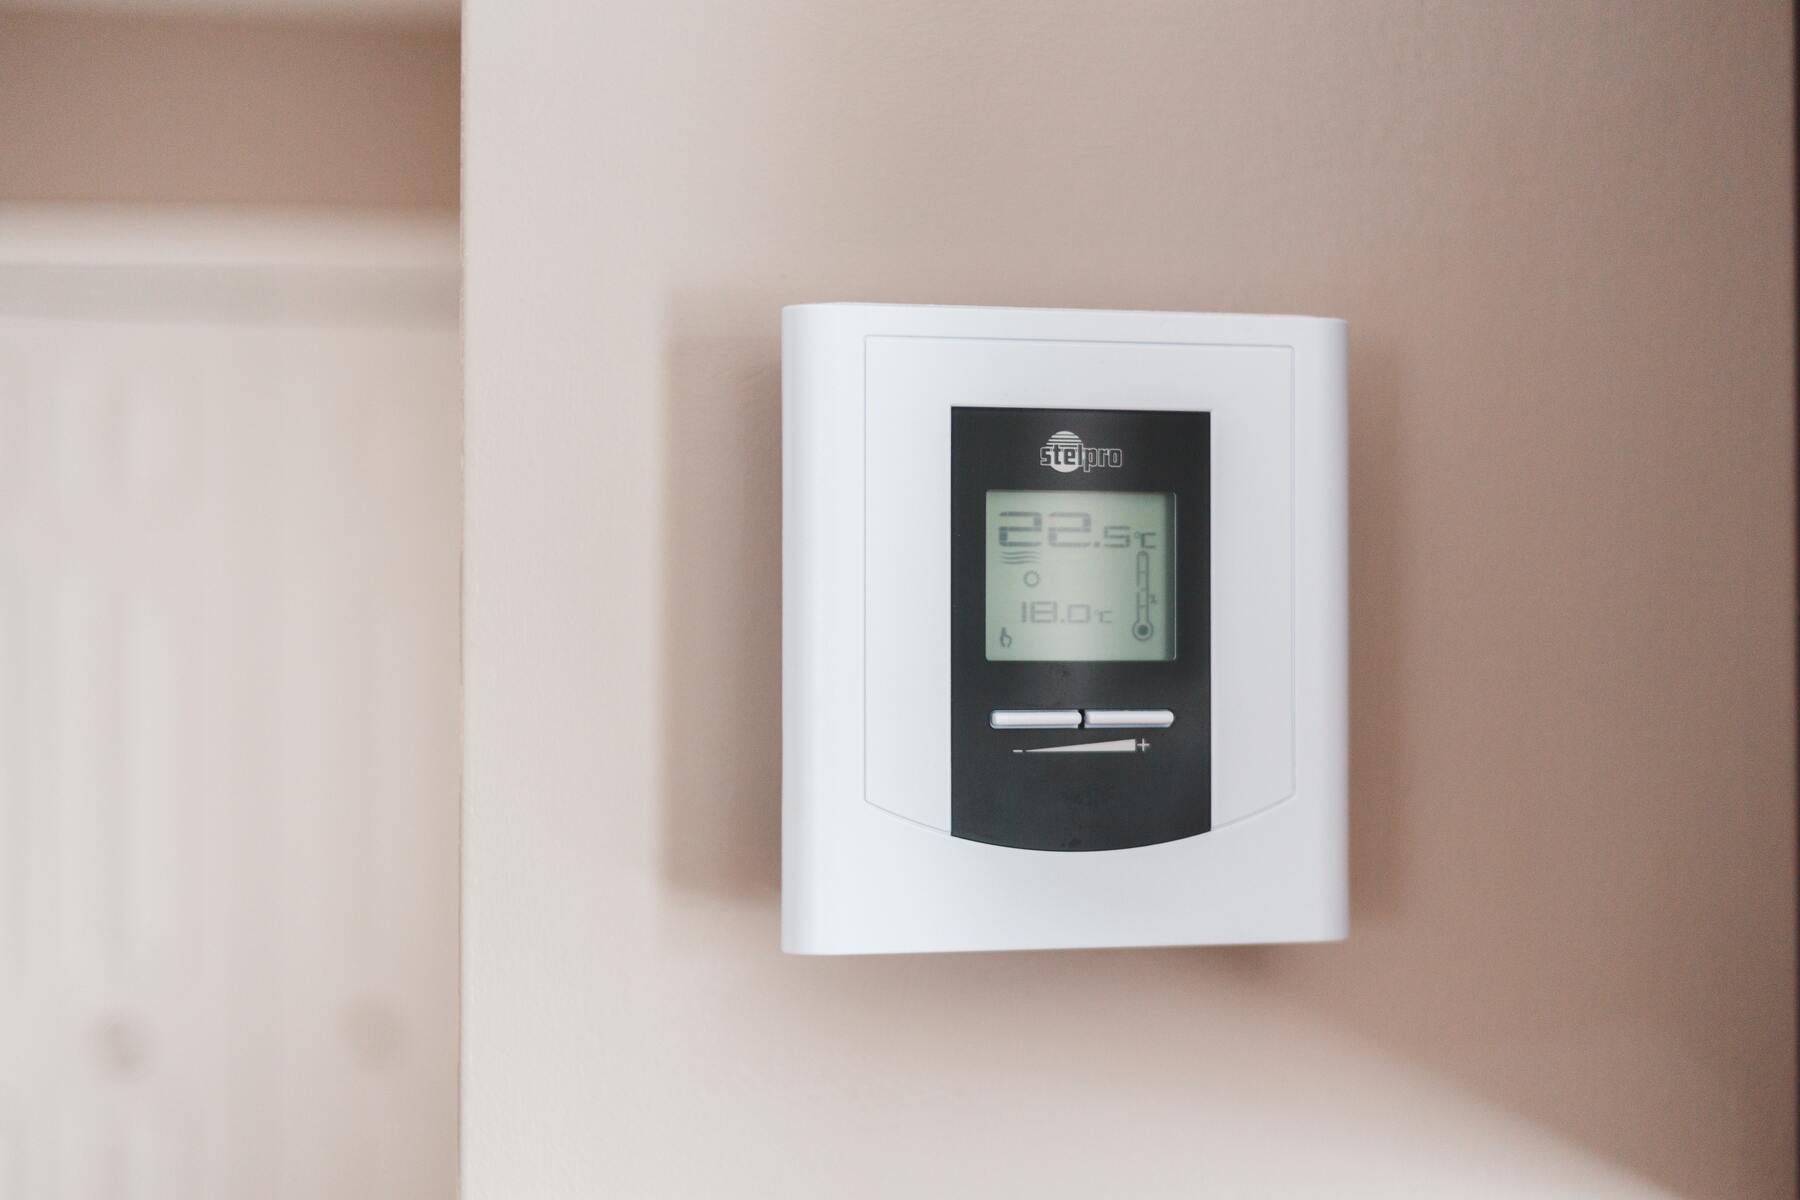 installations thermostats ambiances sans fils